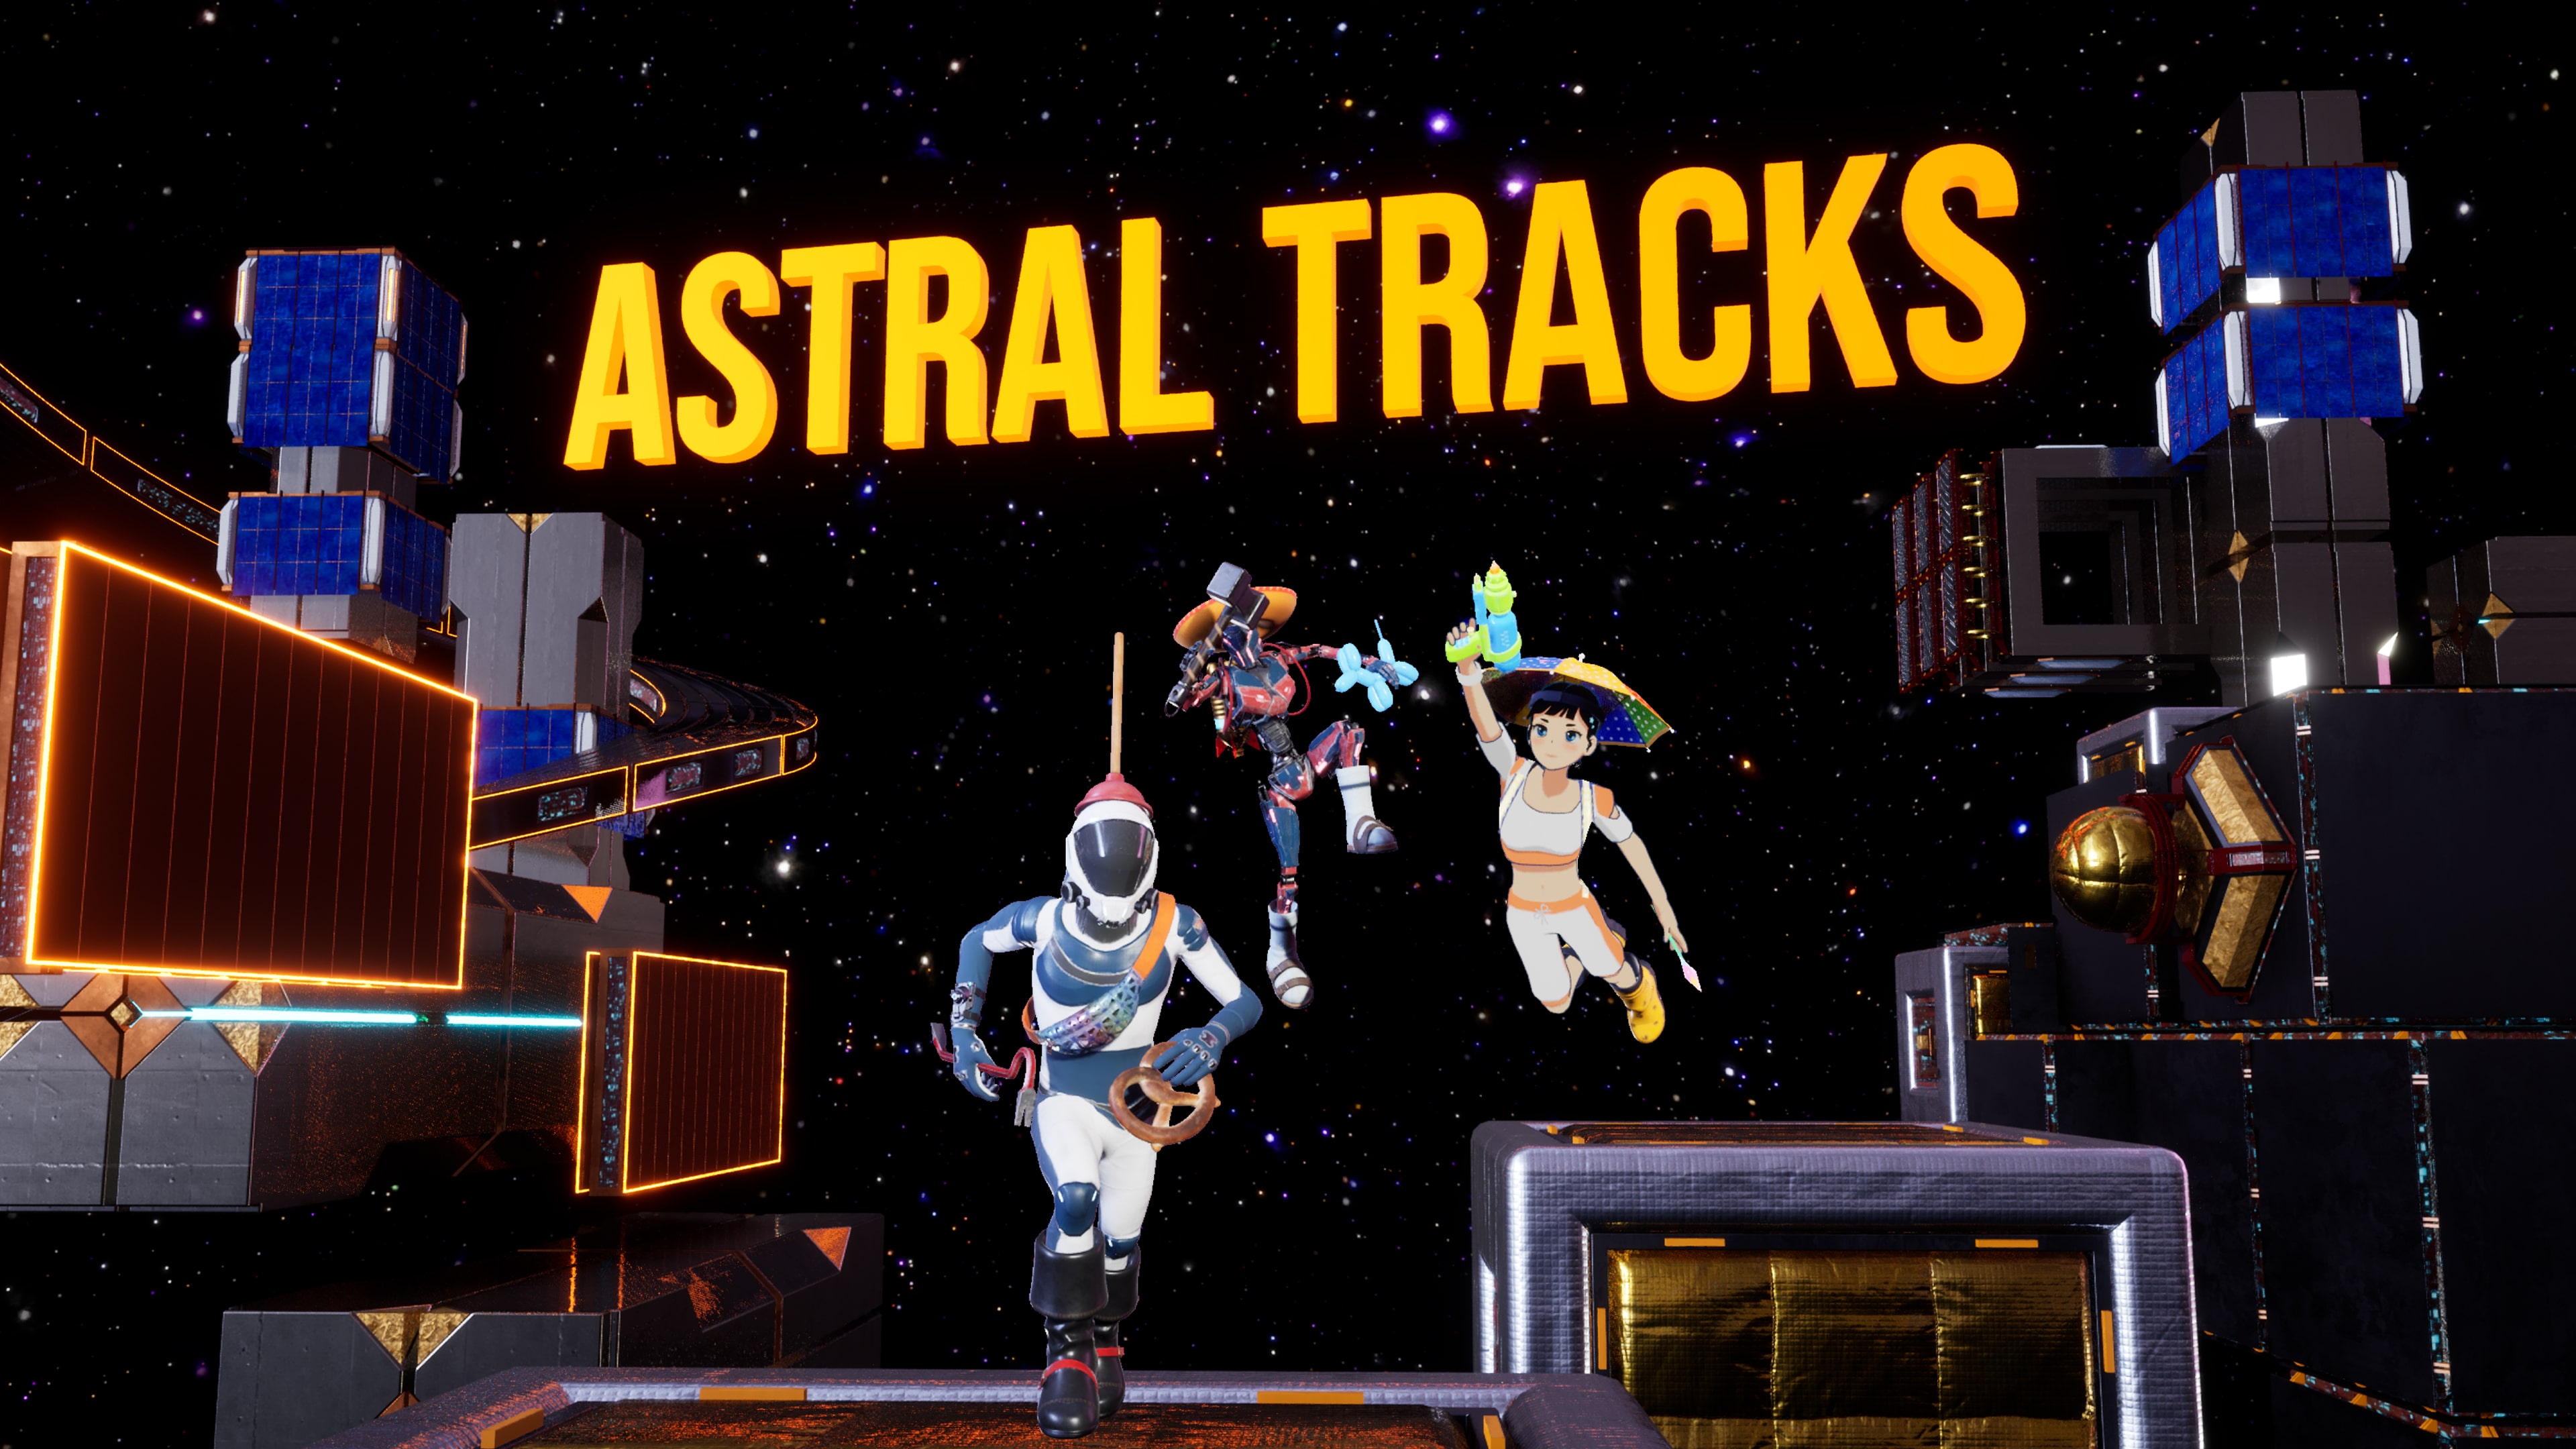 Astral Tracks